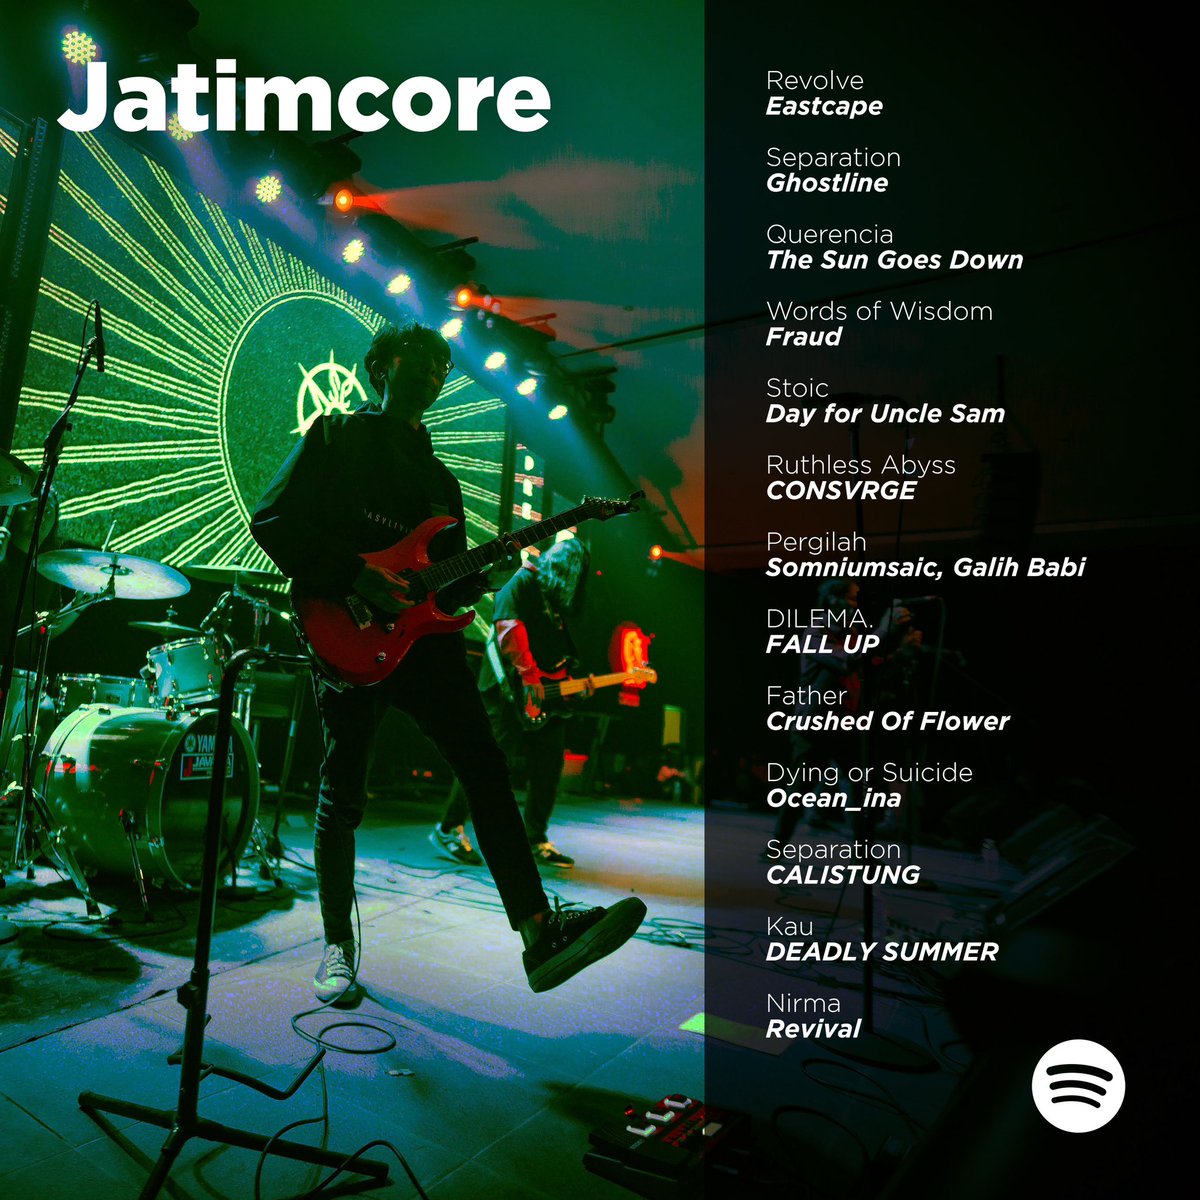 Jatimcore - Spotify Playlist

Berisi karya musik Metalcore, Hardcore, Punk Rock, Pop Punk, dan Emo dari band-band Jawa Timur.

open.spotify.com/playlist/5WlLK…

Photo by @Rexi_Rexii 

#somniumsaic